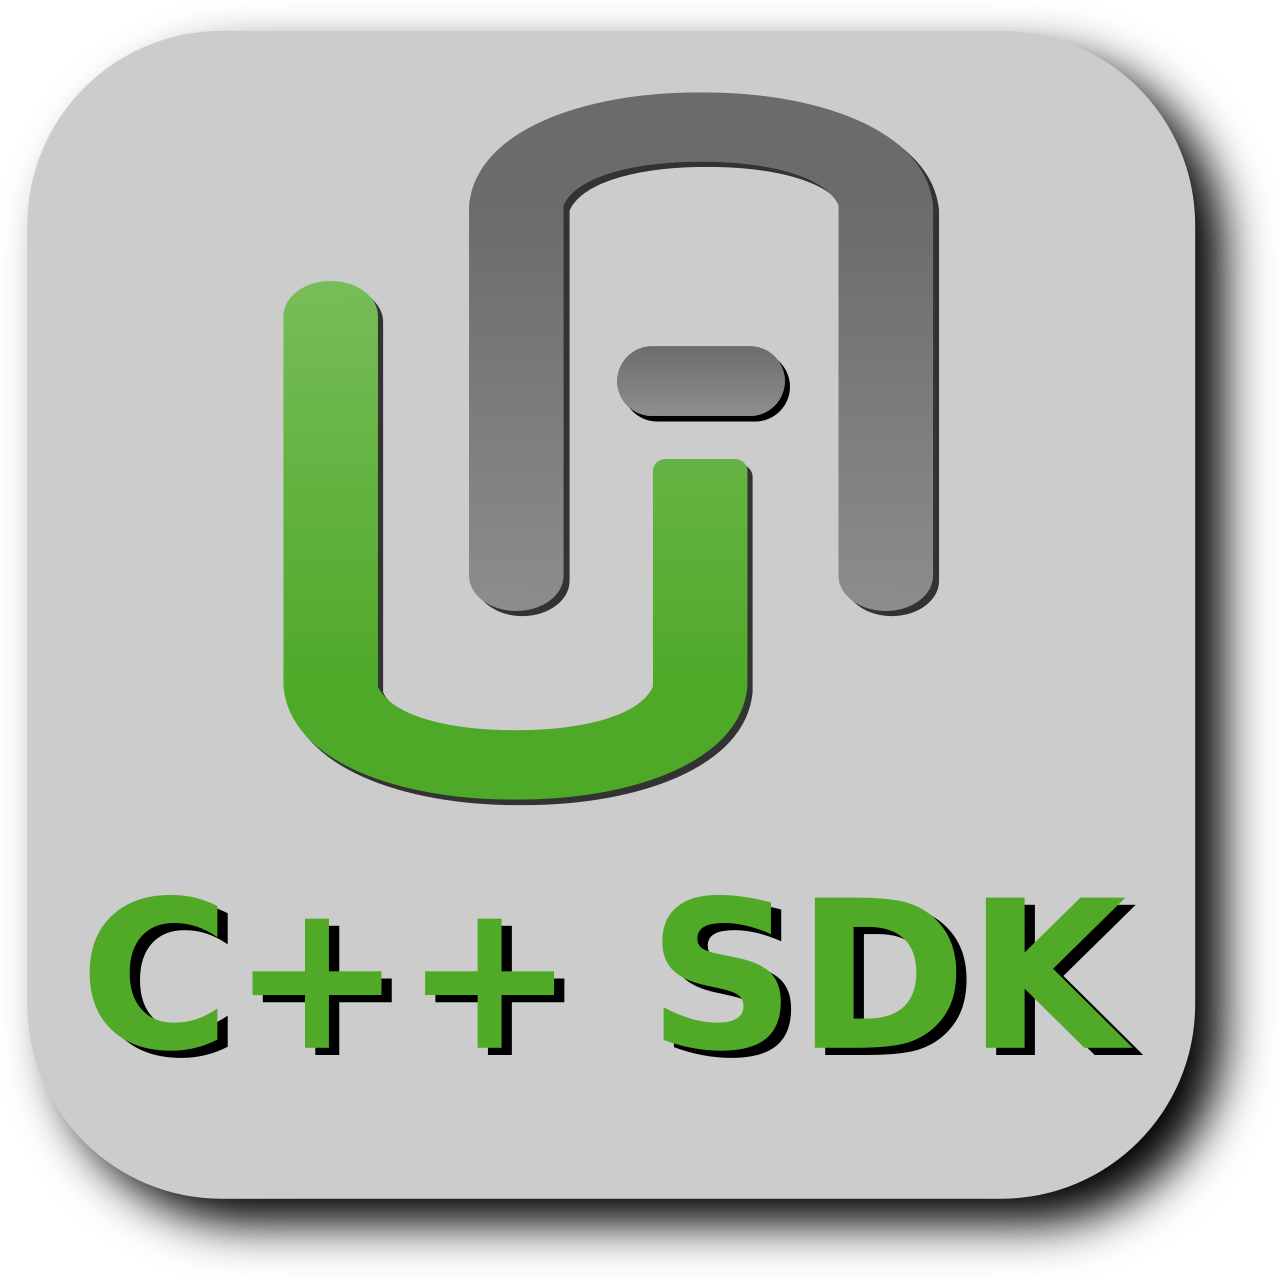 C++ Based OPC UA Client SDK/Toolkit